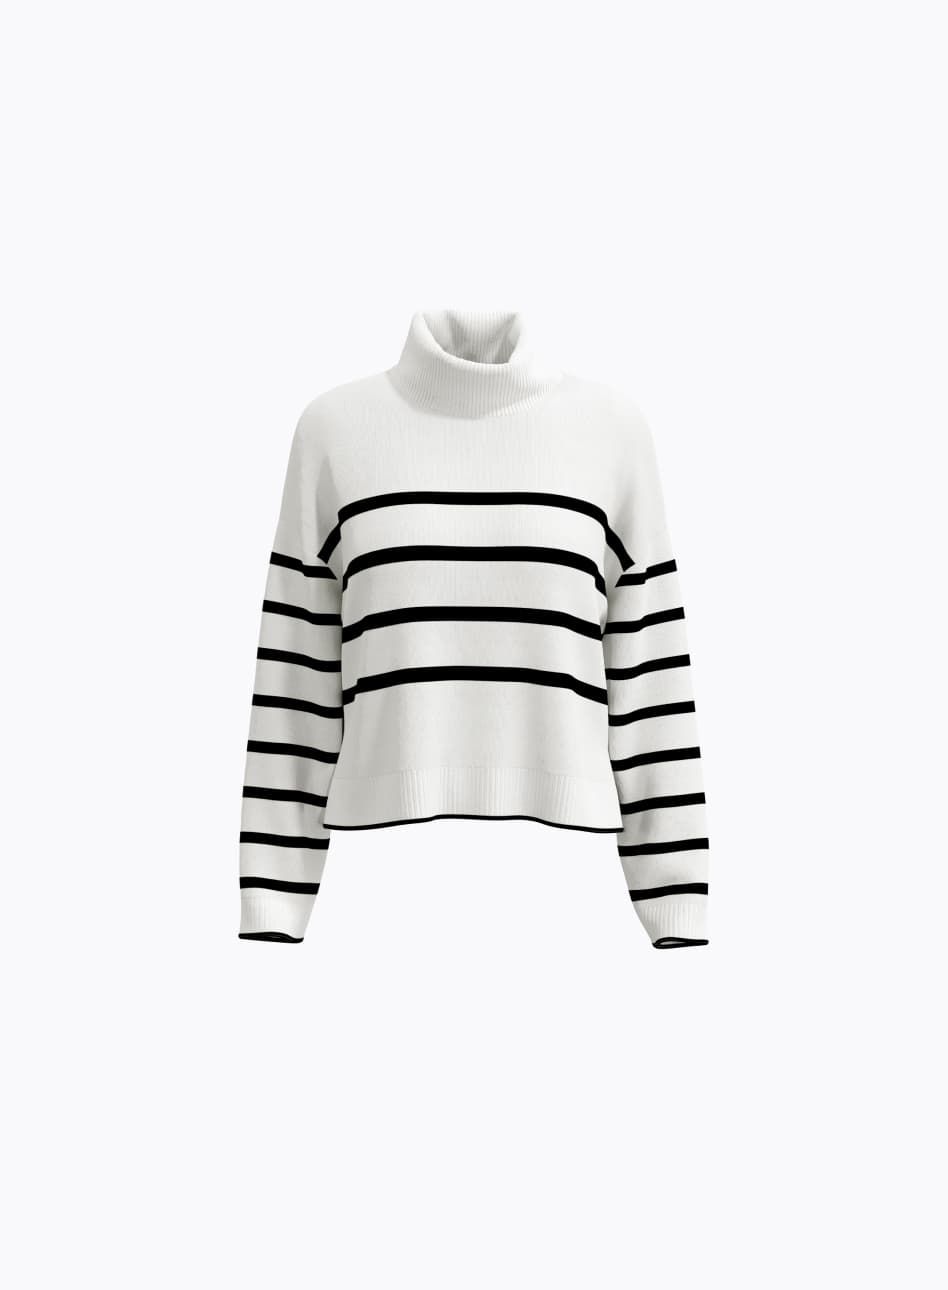 White striped turtleneck sweater.